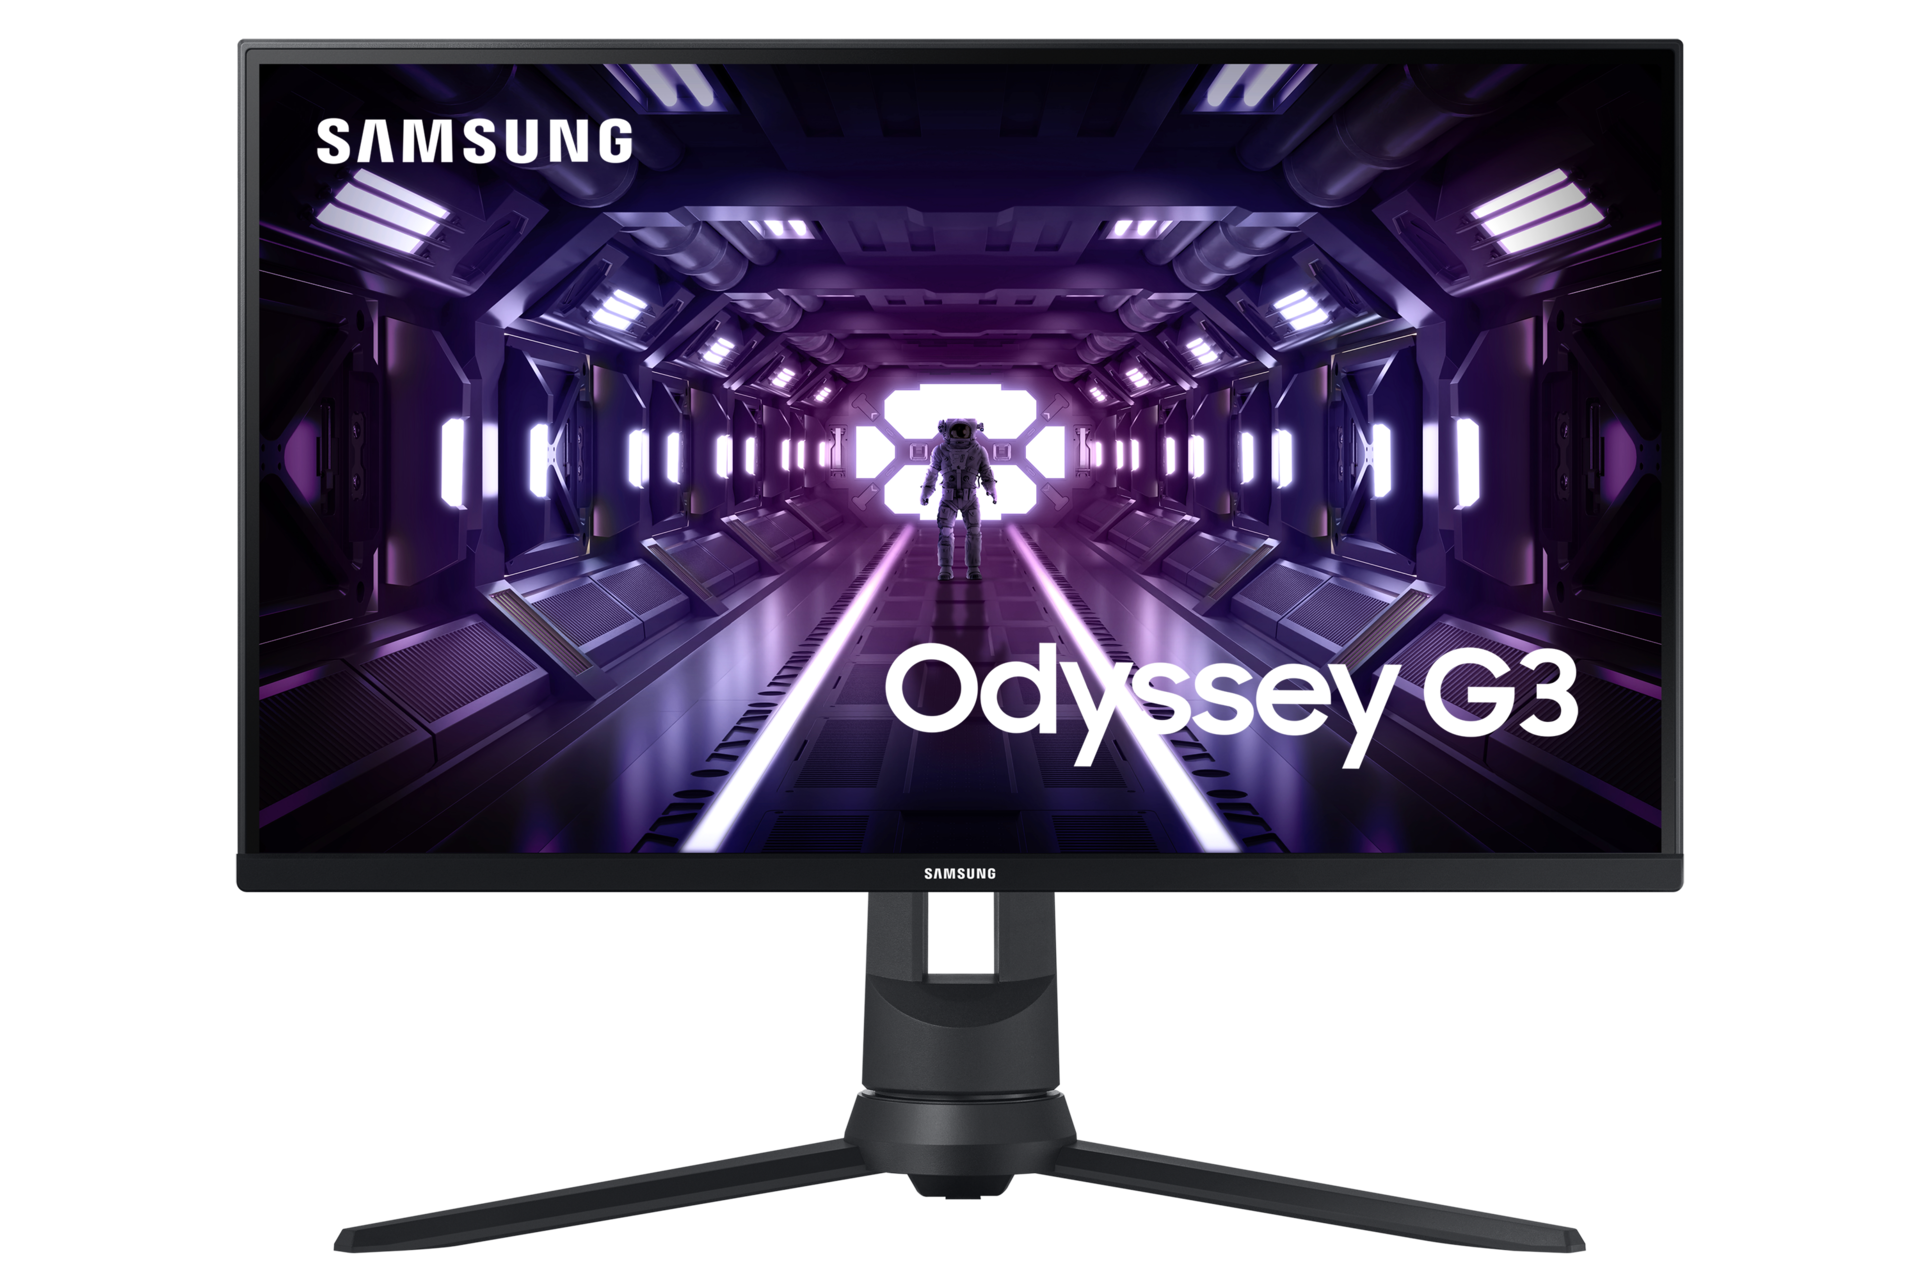 Samsung Odyssey G3 1080p Gaming Monitor